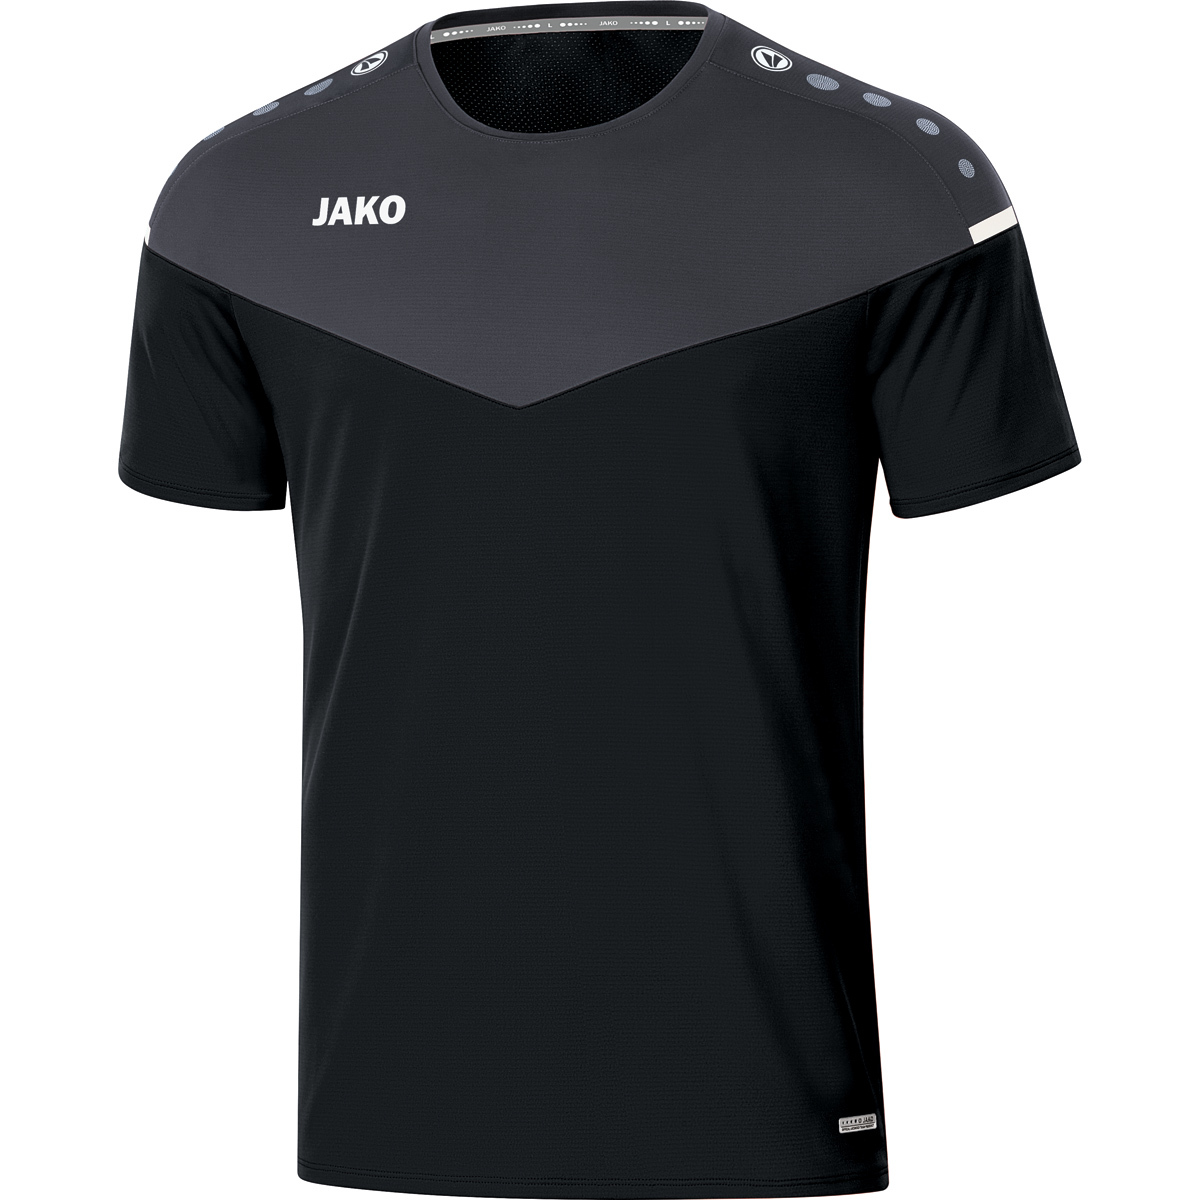 schwarz/anthrazit, JAKO 6120 XXL, Gr. 2.0 Herren, Champ T-Shirt